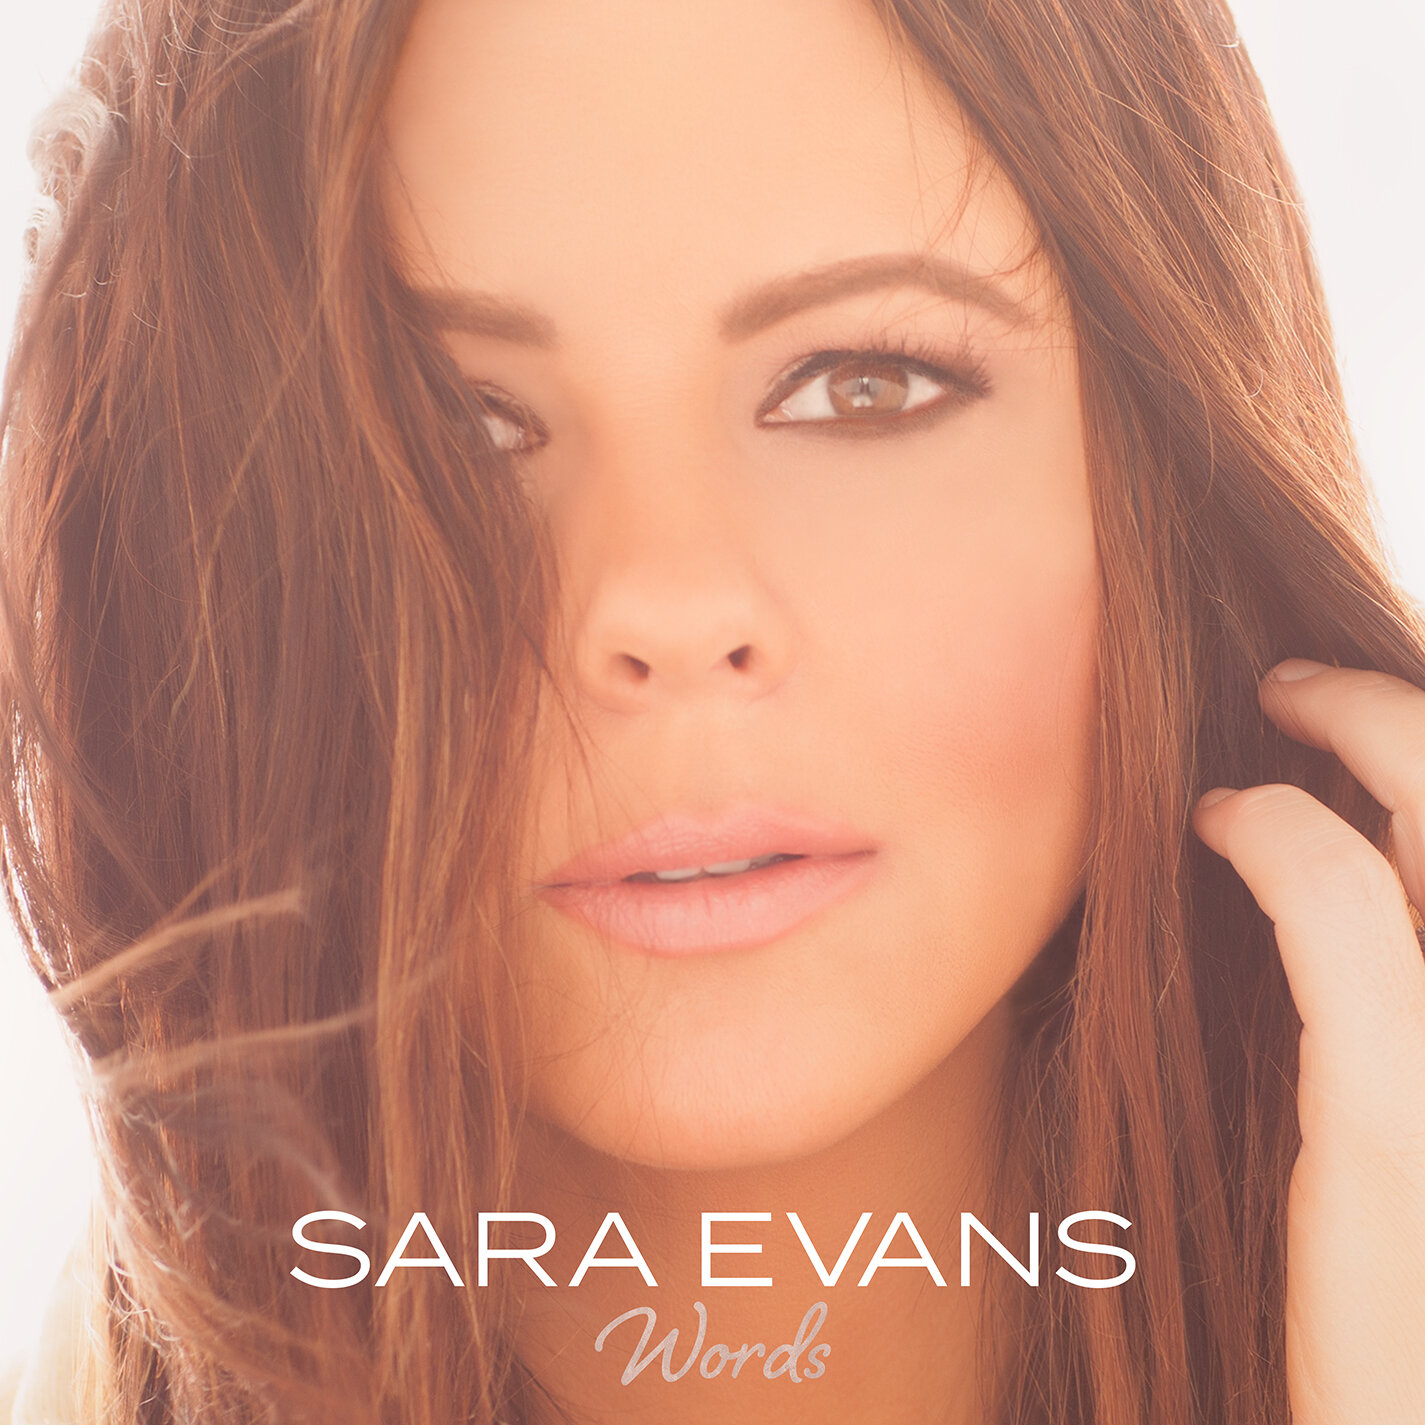 Sara Evans - Words - Cover RGB 4.75x4.75.jpg